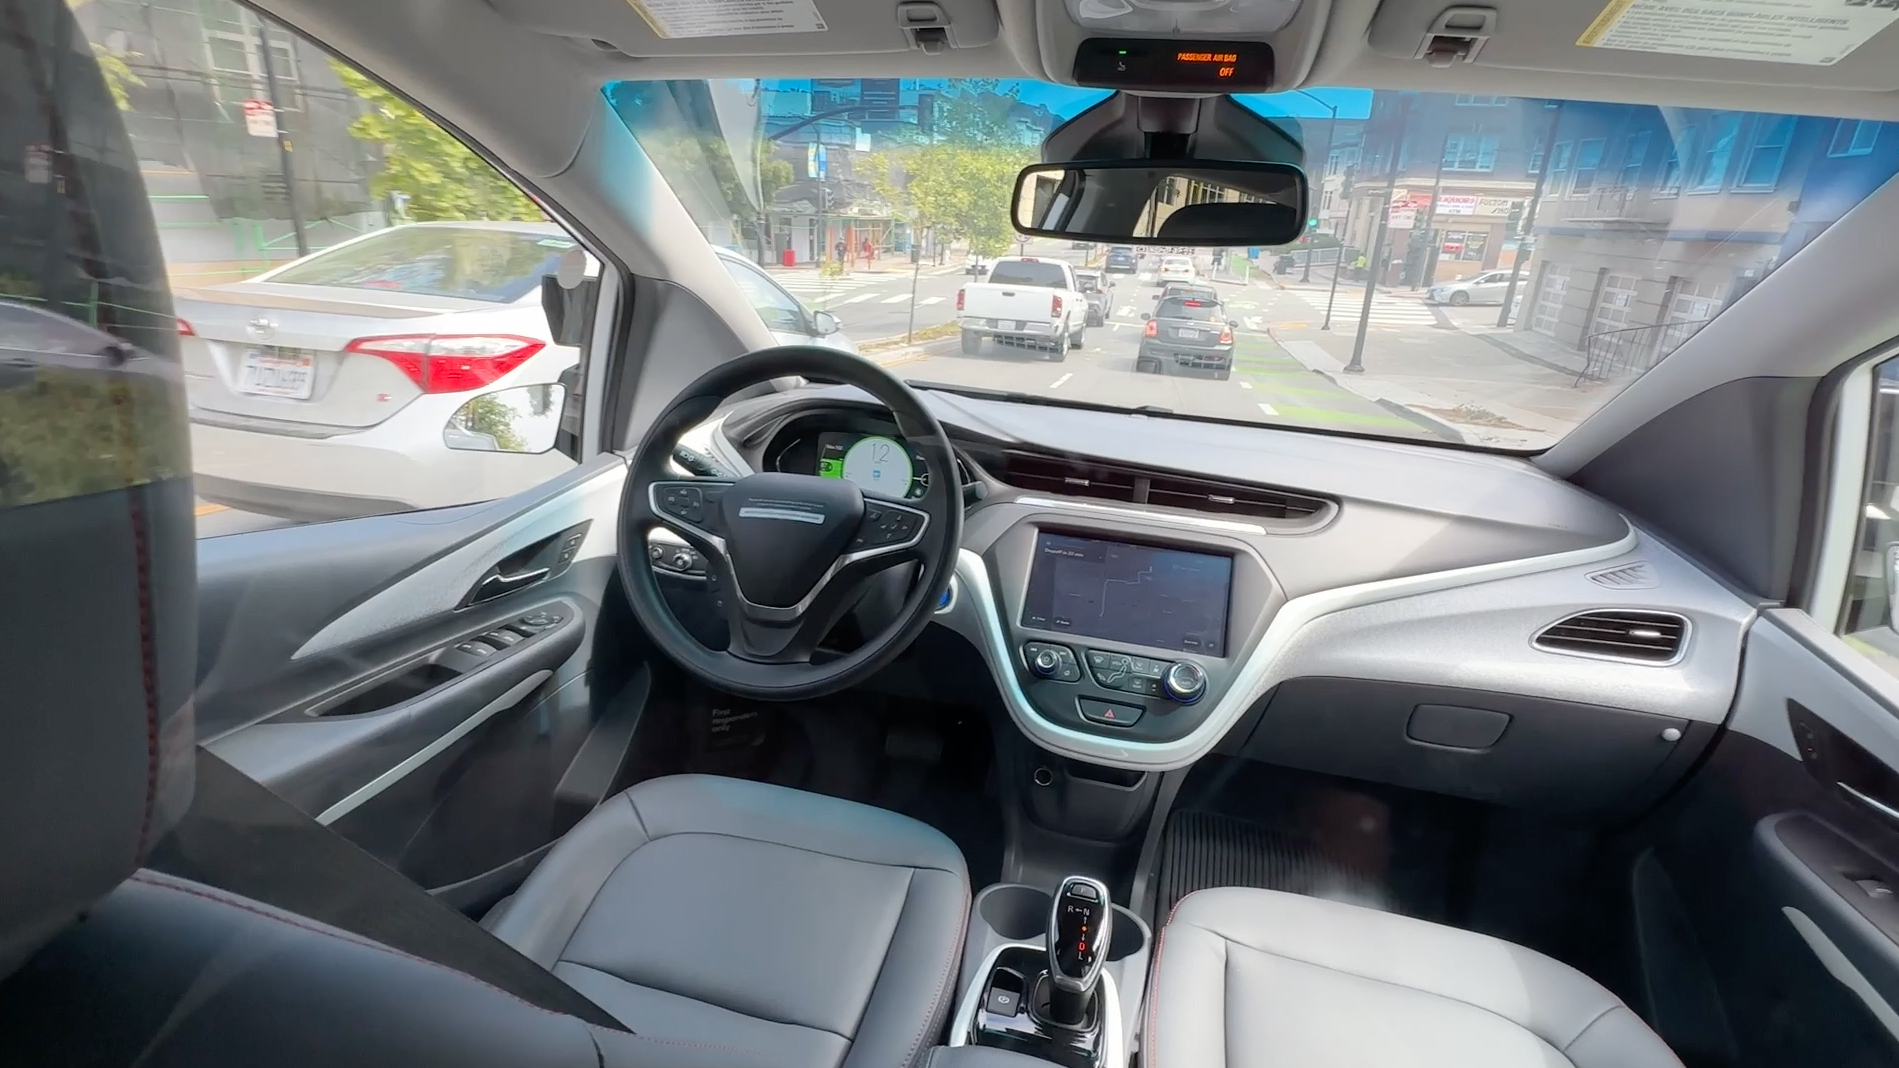 Driverless car companies seek expansion in San Francisco – NBC Bay Area